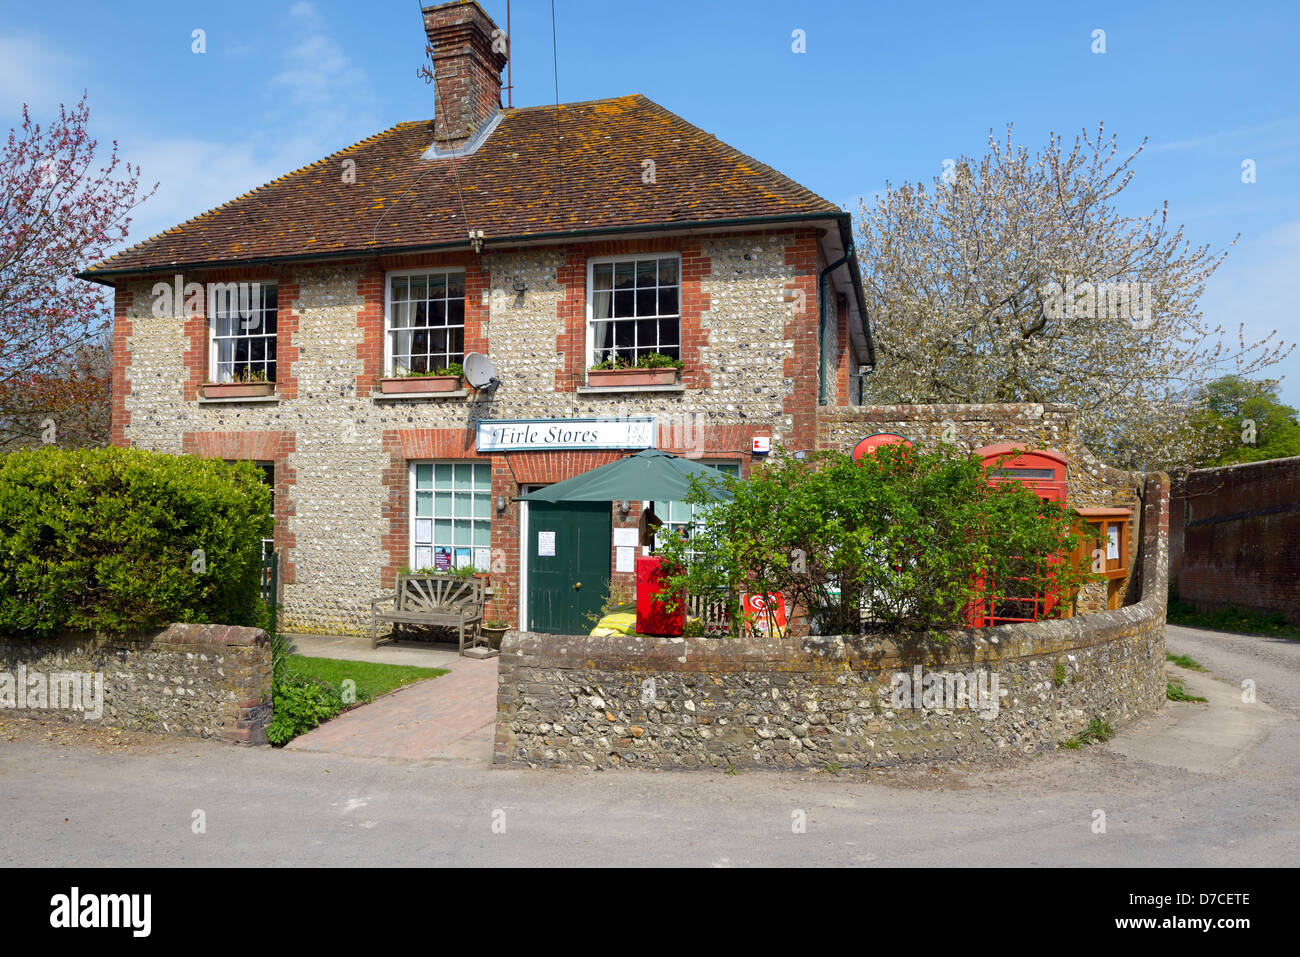 Firle Stores, Dorfladen und Post Office, Firle, East Sussex, UK Stockfoto